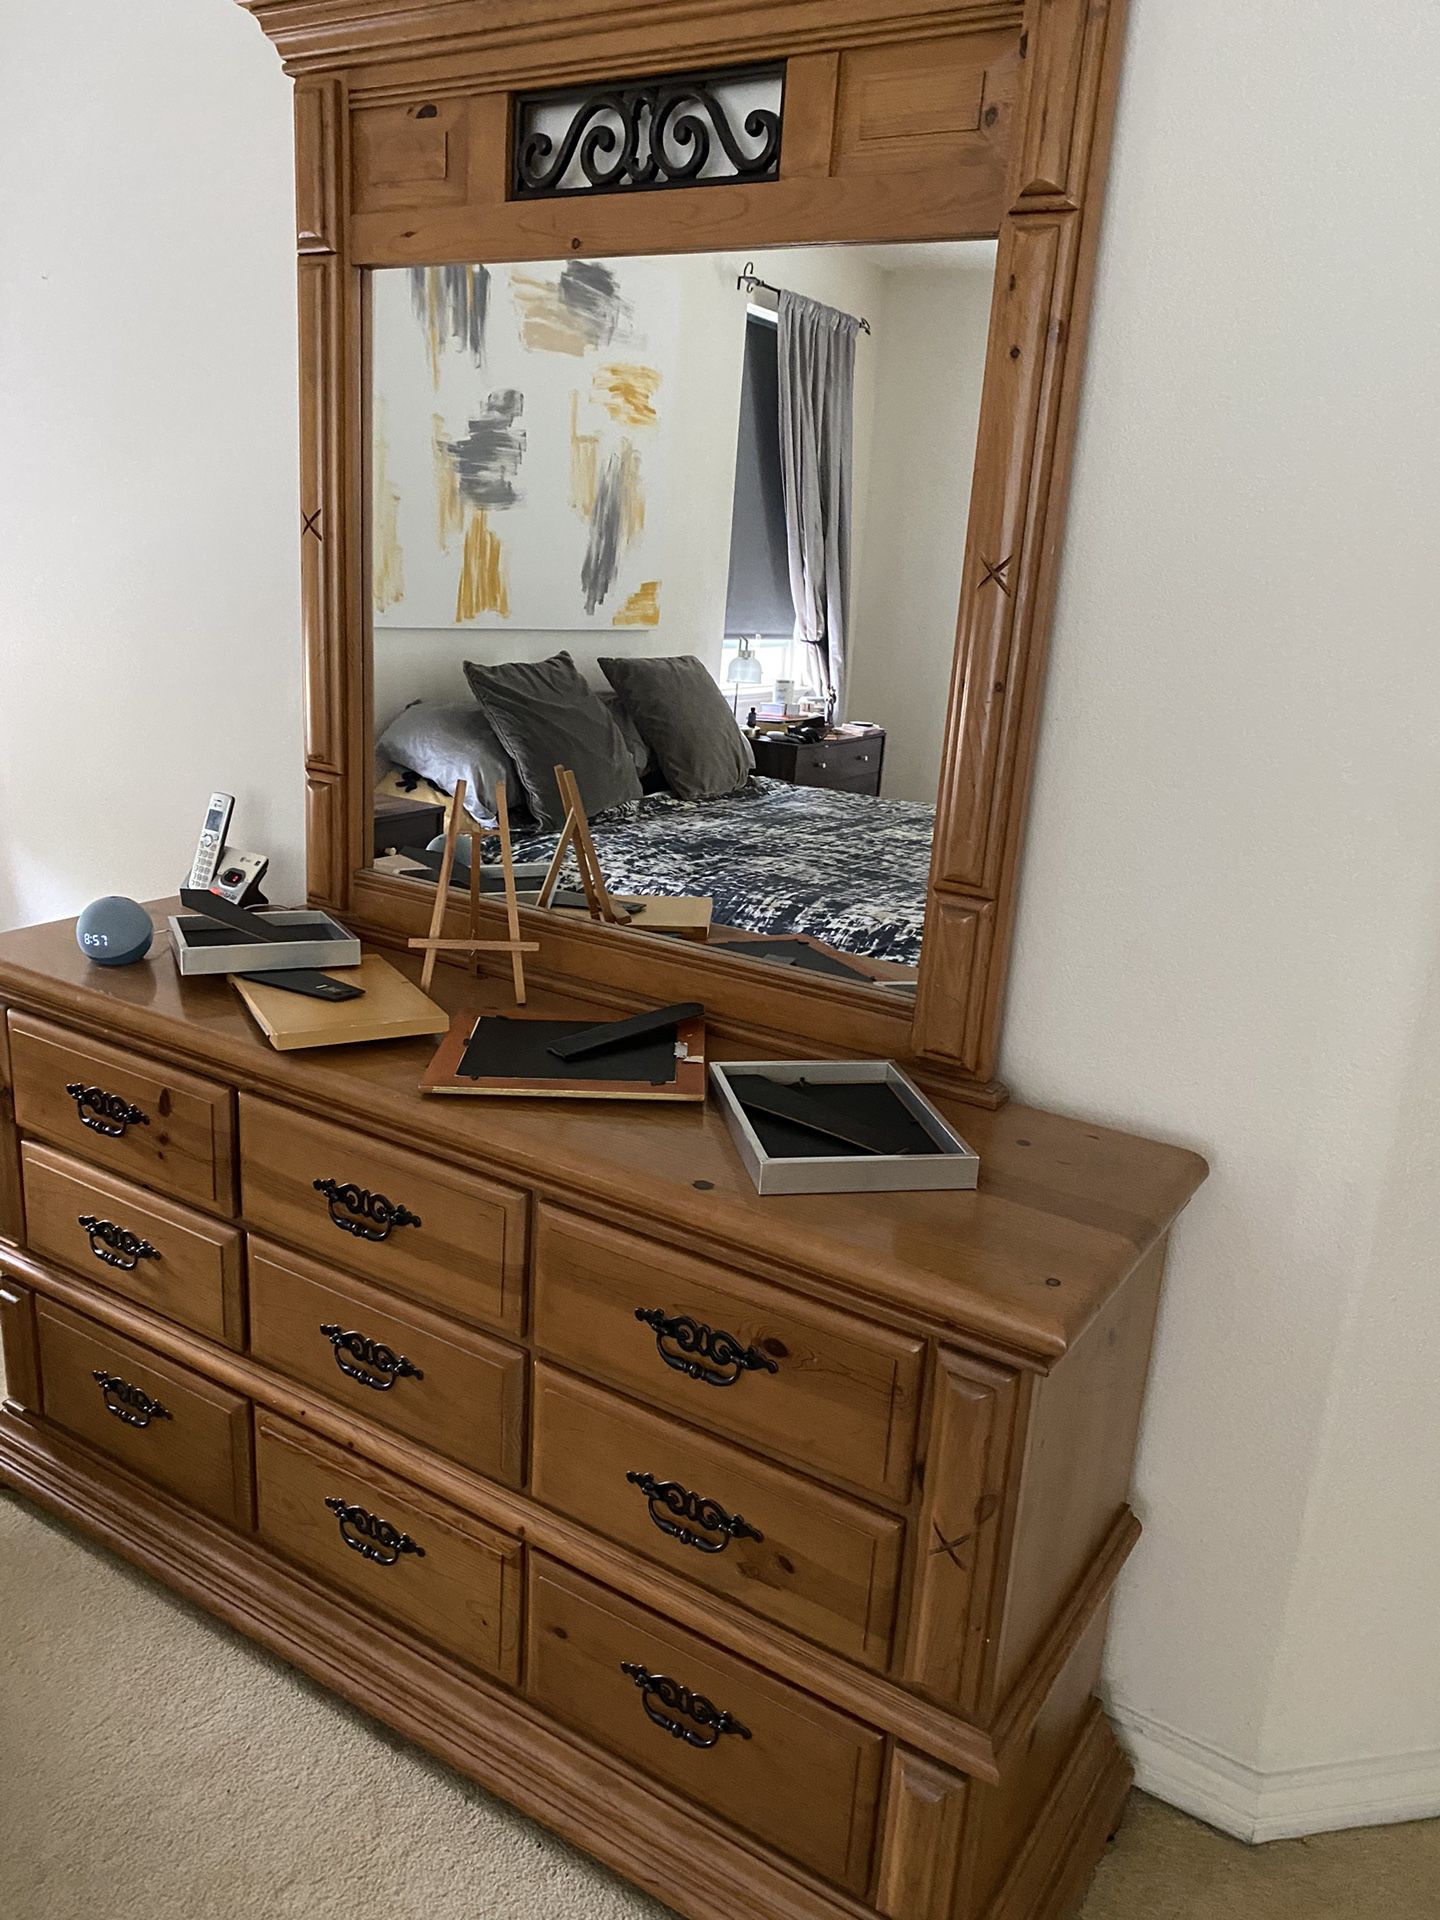 Wood Dresser With Mirror $250